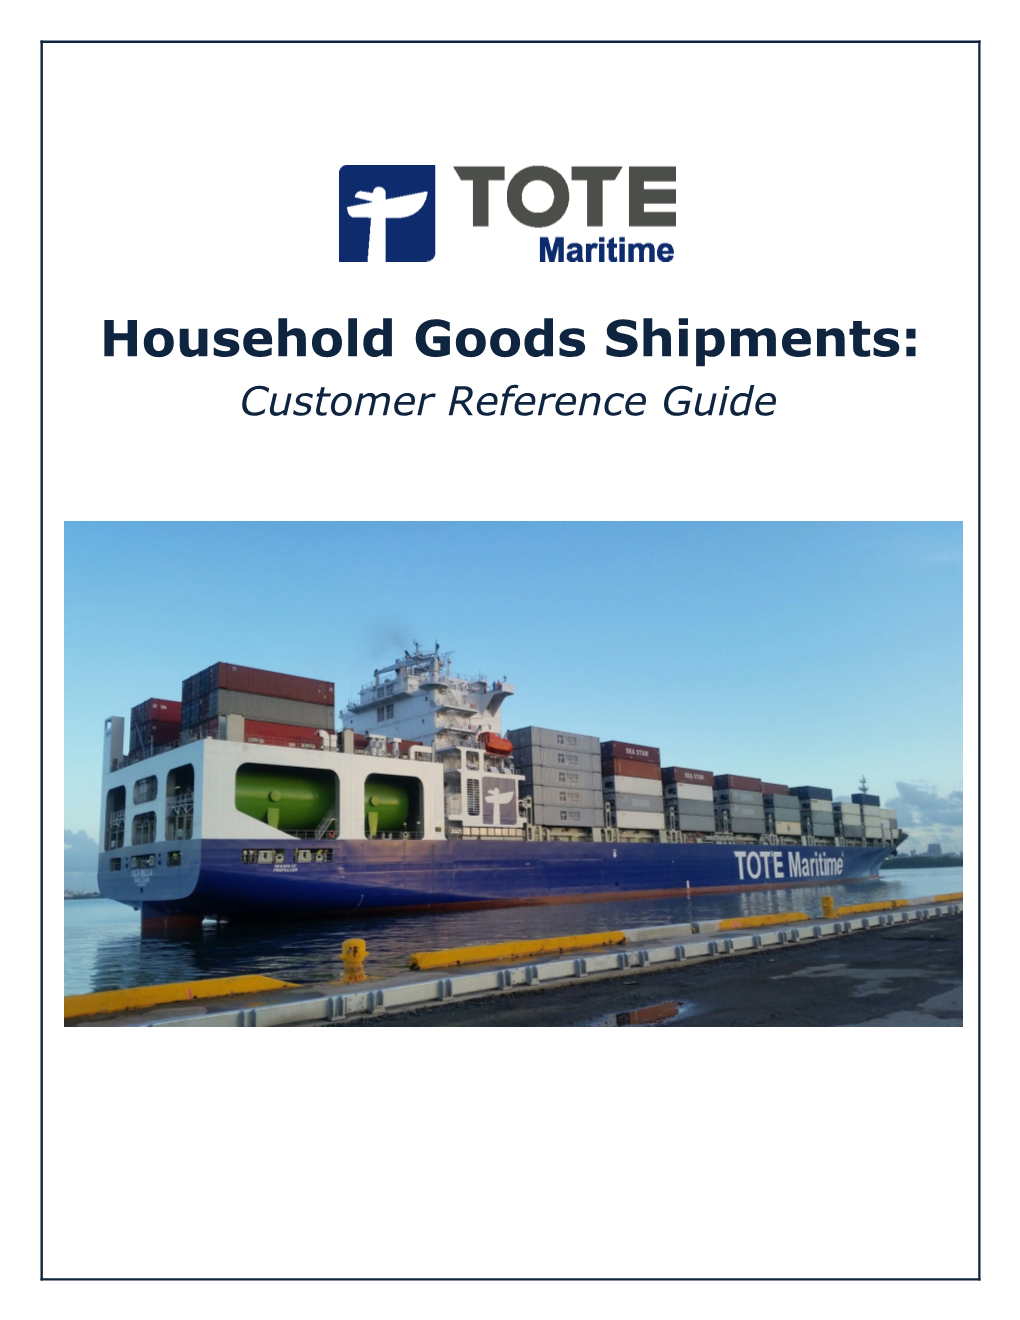 Household Goods Shipments Packet